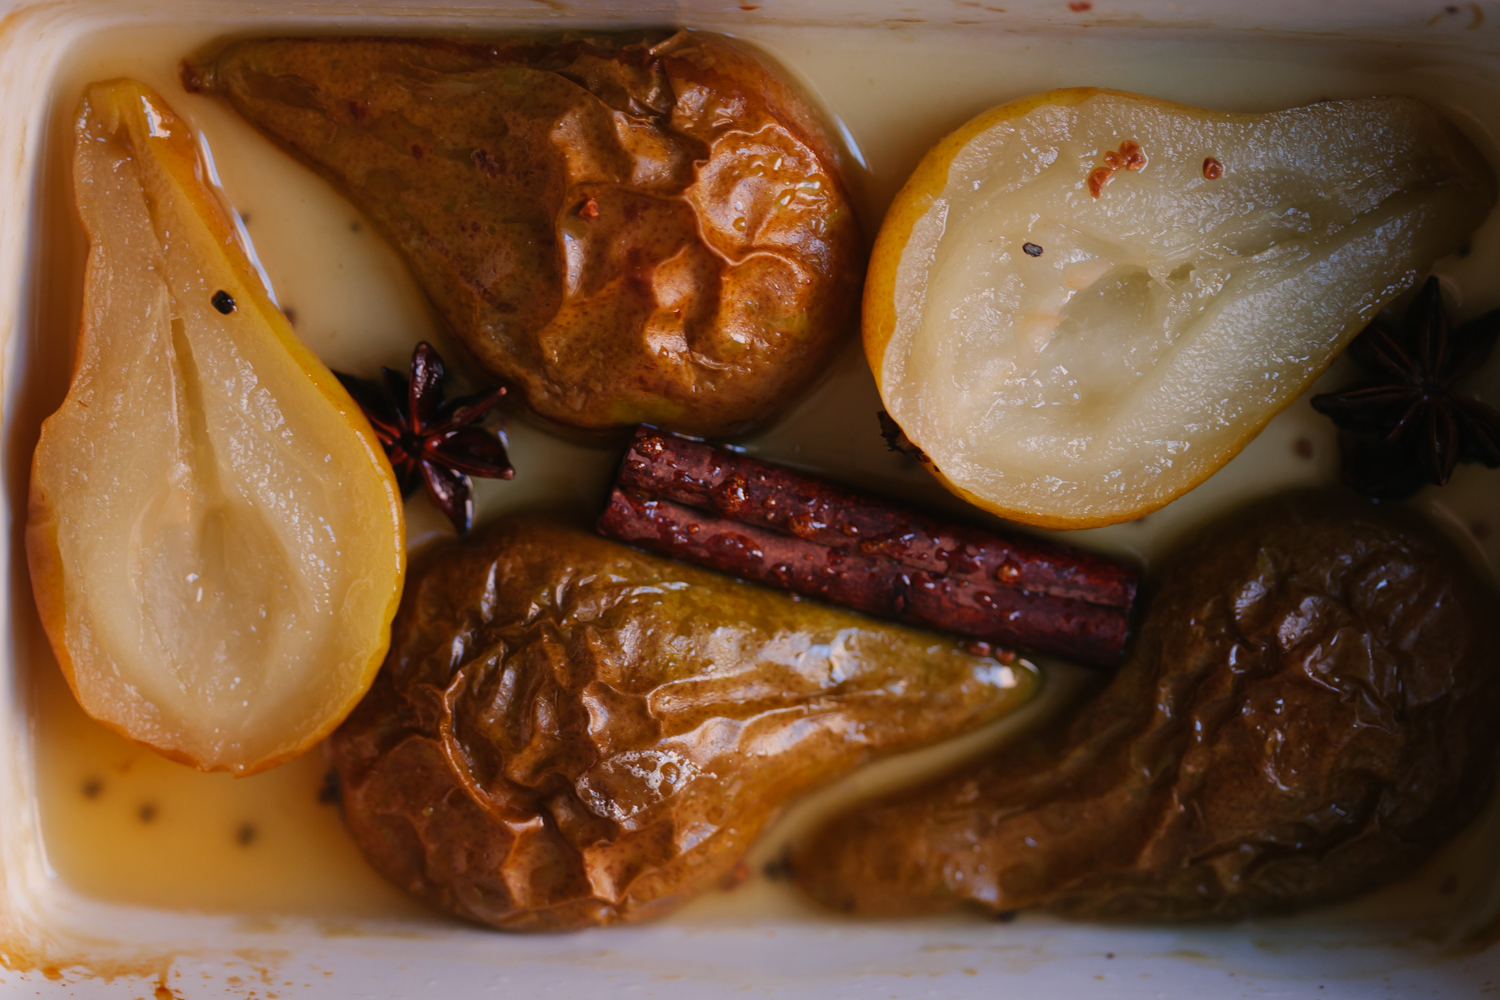 Honey-Roasted Pears with Vanilla Cashew Cream | Golubka Kitchen